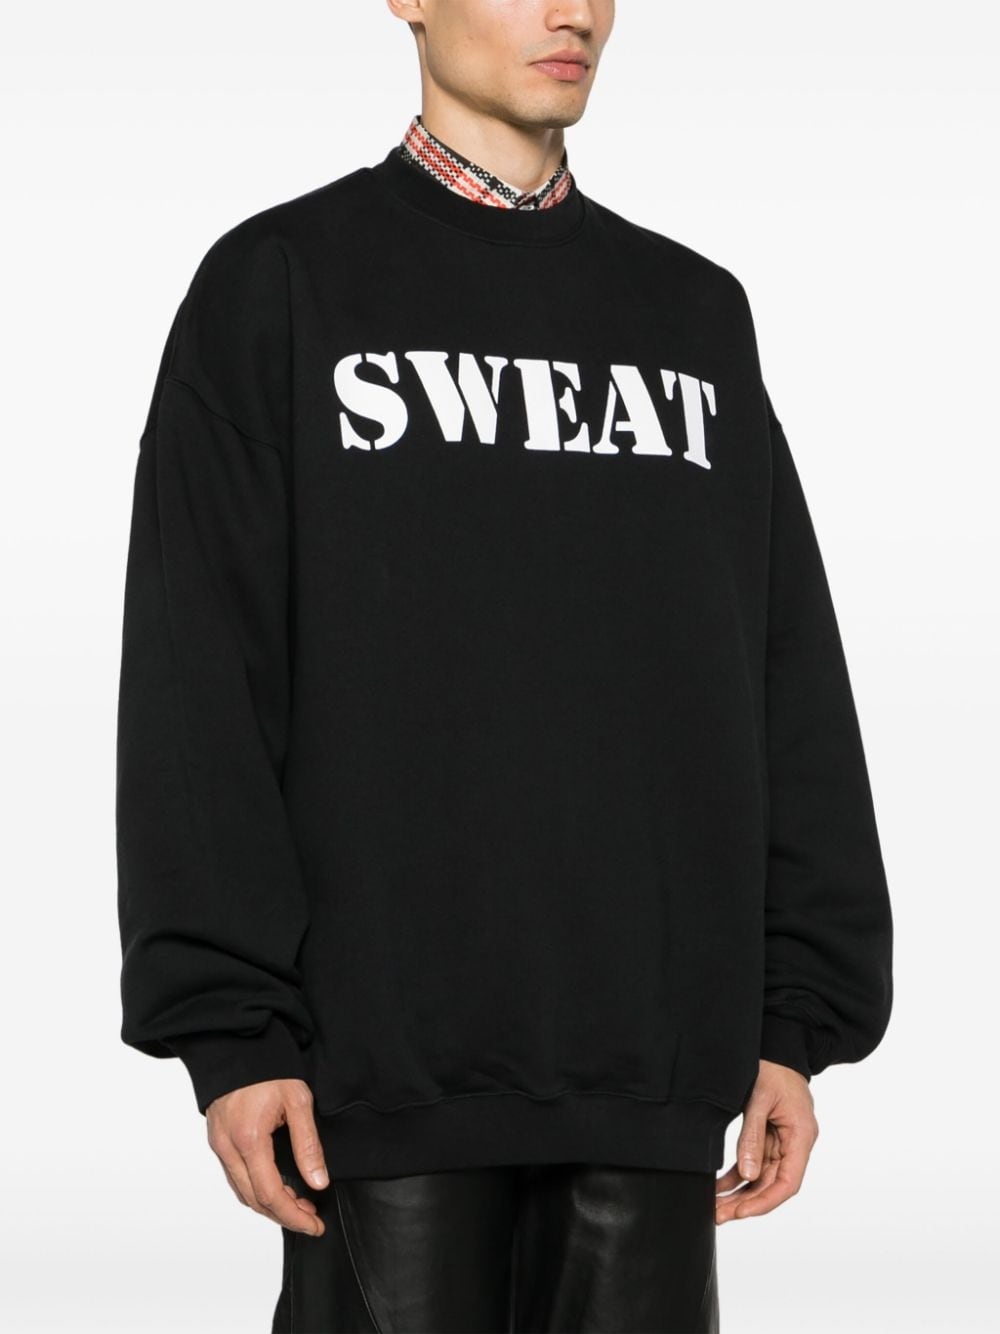 Sweat cotton-blend sweatshirt - 4